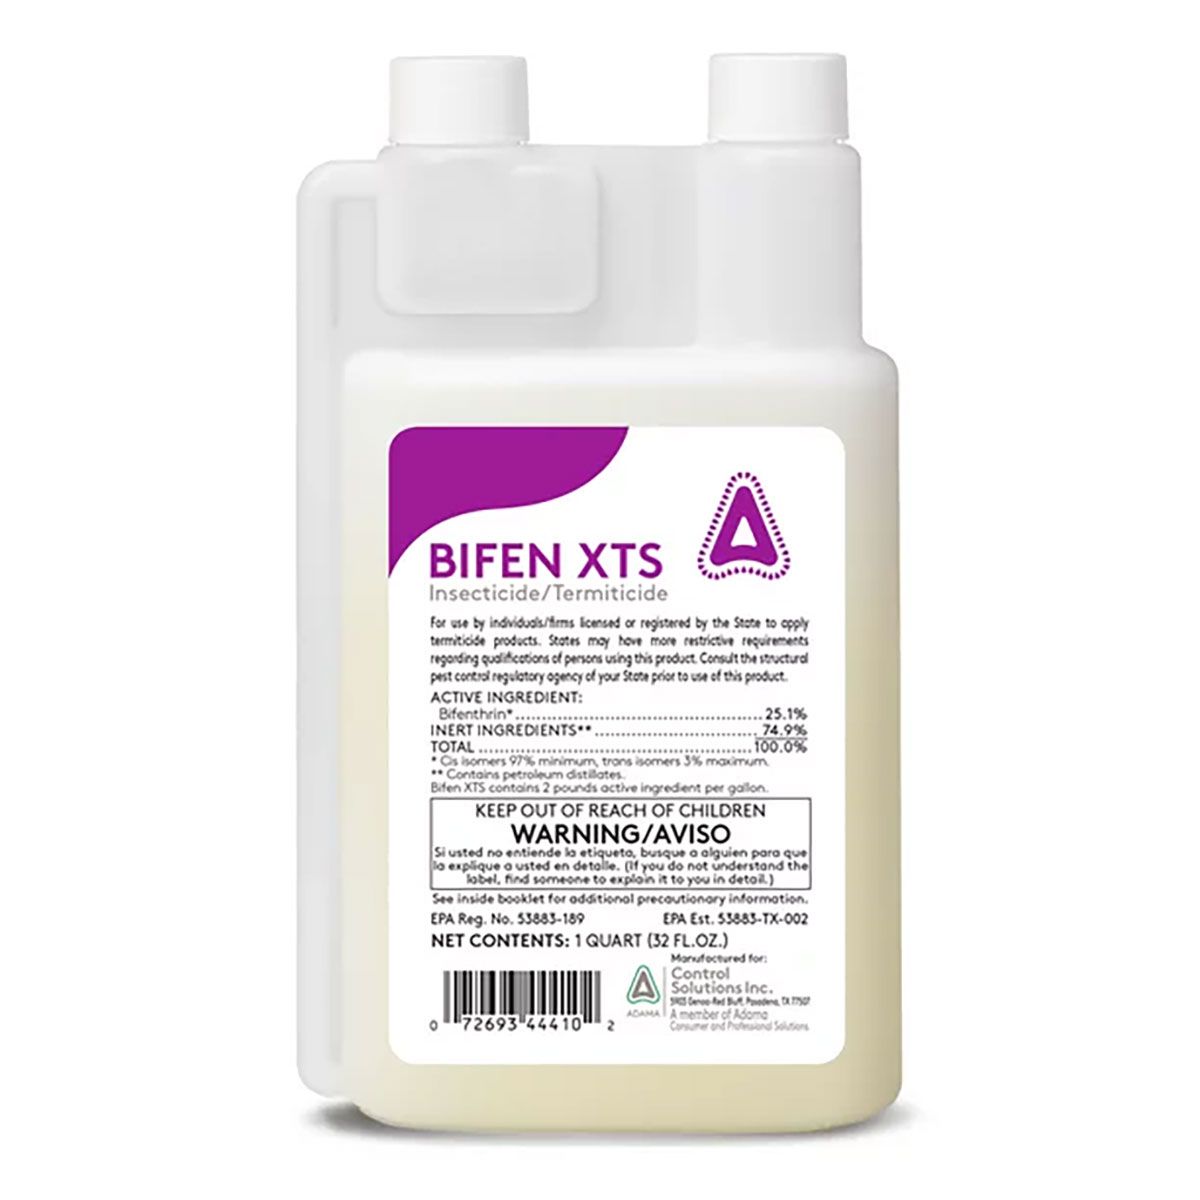 An image of a 32 oz bottle of Bifen XTS termite killer.